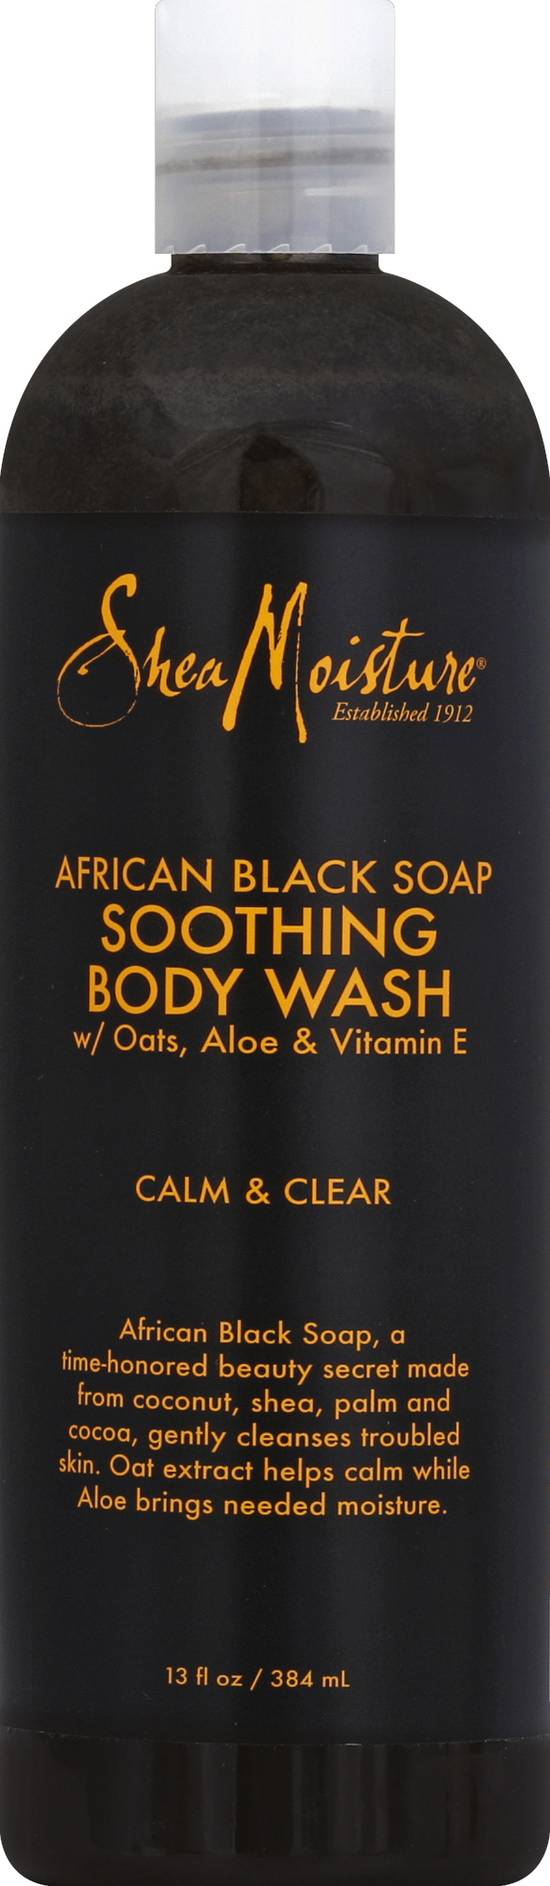 Shea Moisture African Black Soap Soothing Body Wash (13 fl oz)